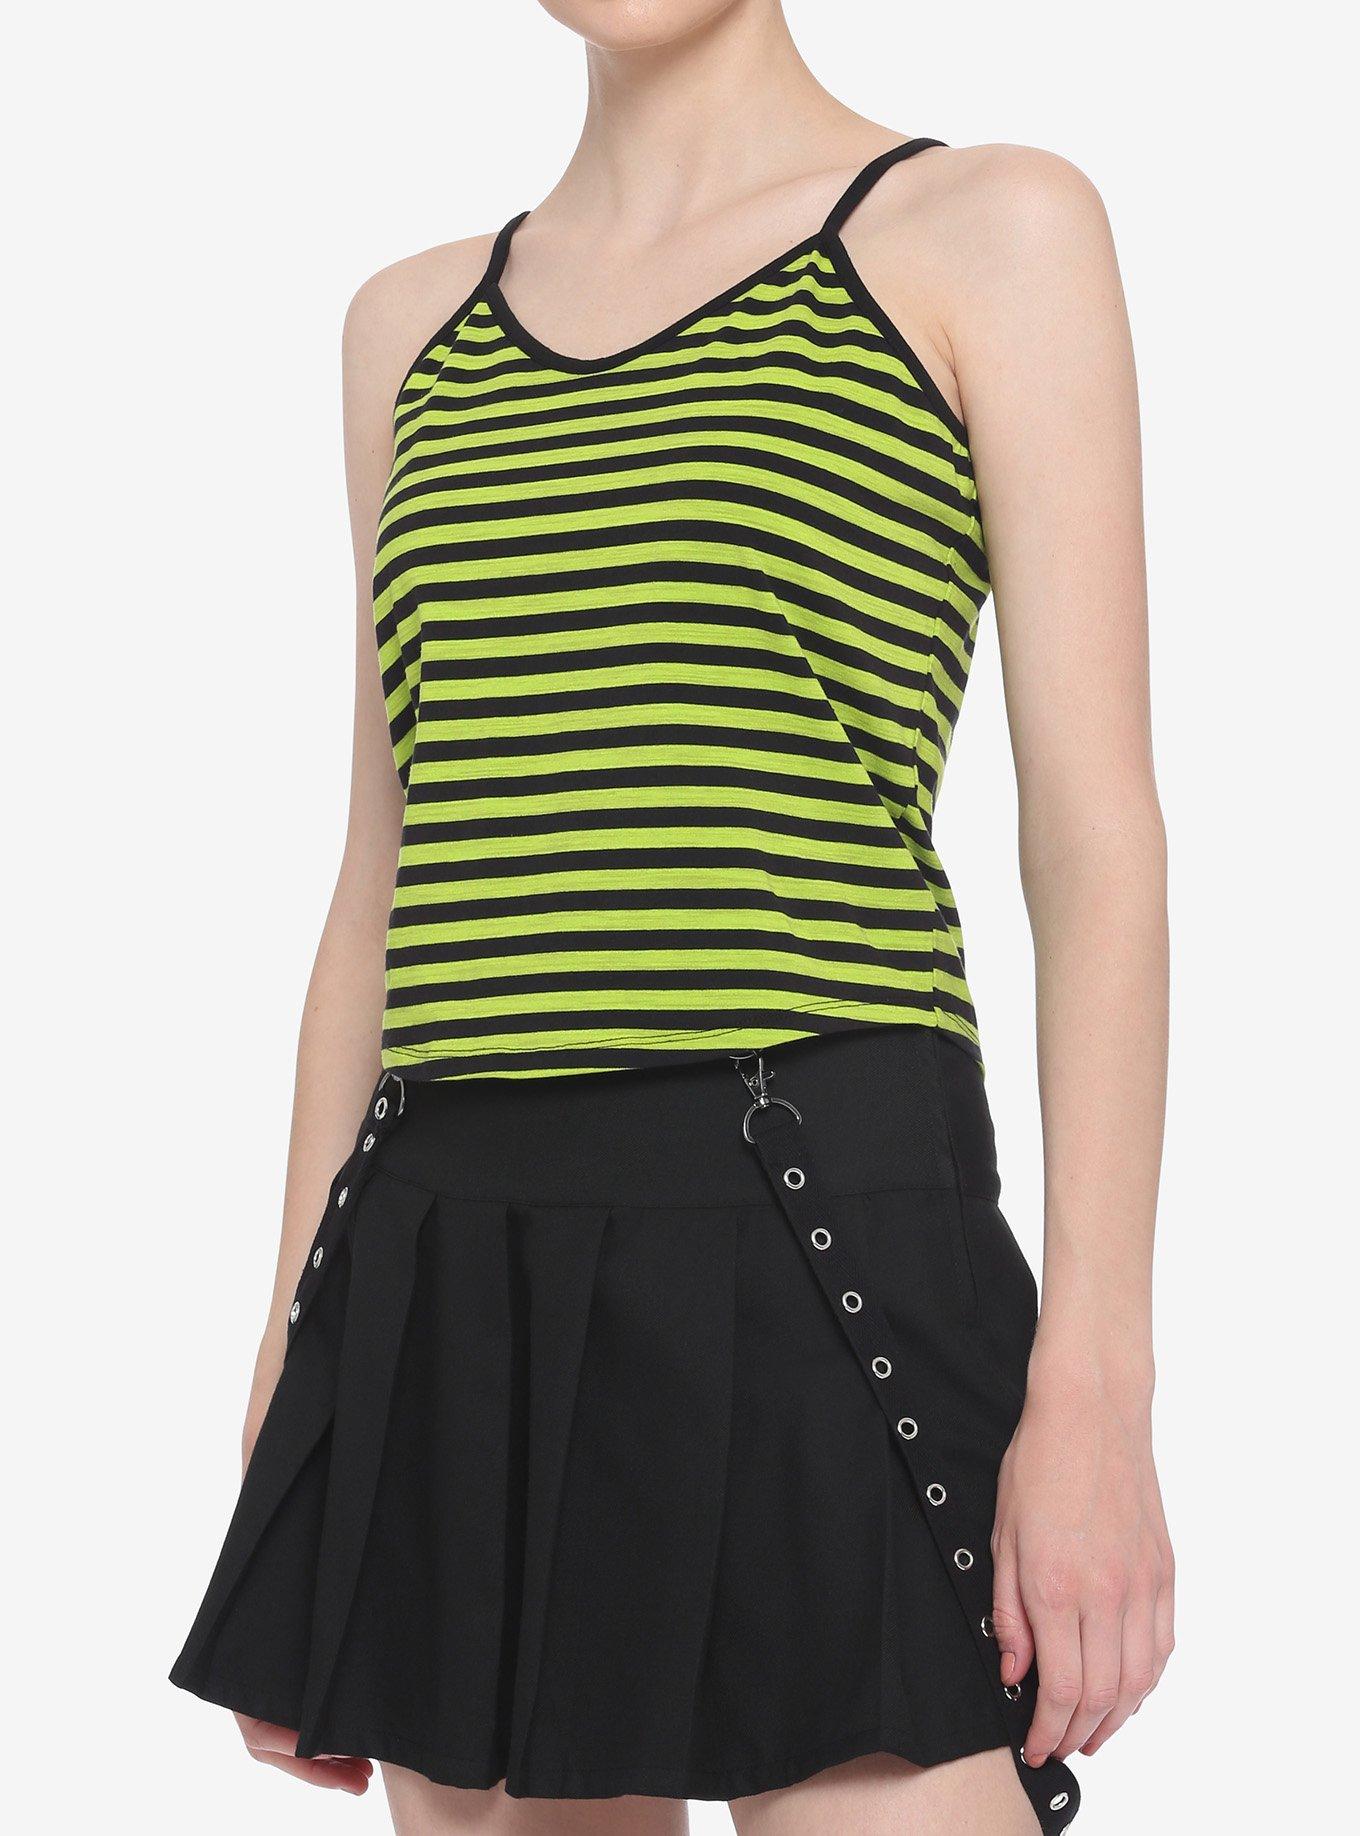 Black & Lime Green Stripe Girls Strappy Crop Tank Top, STRIPES, hi-res